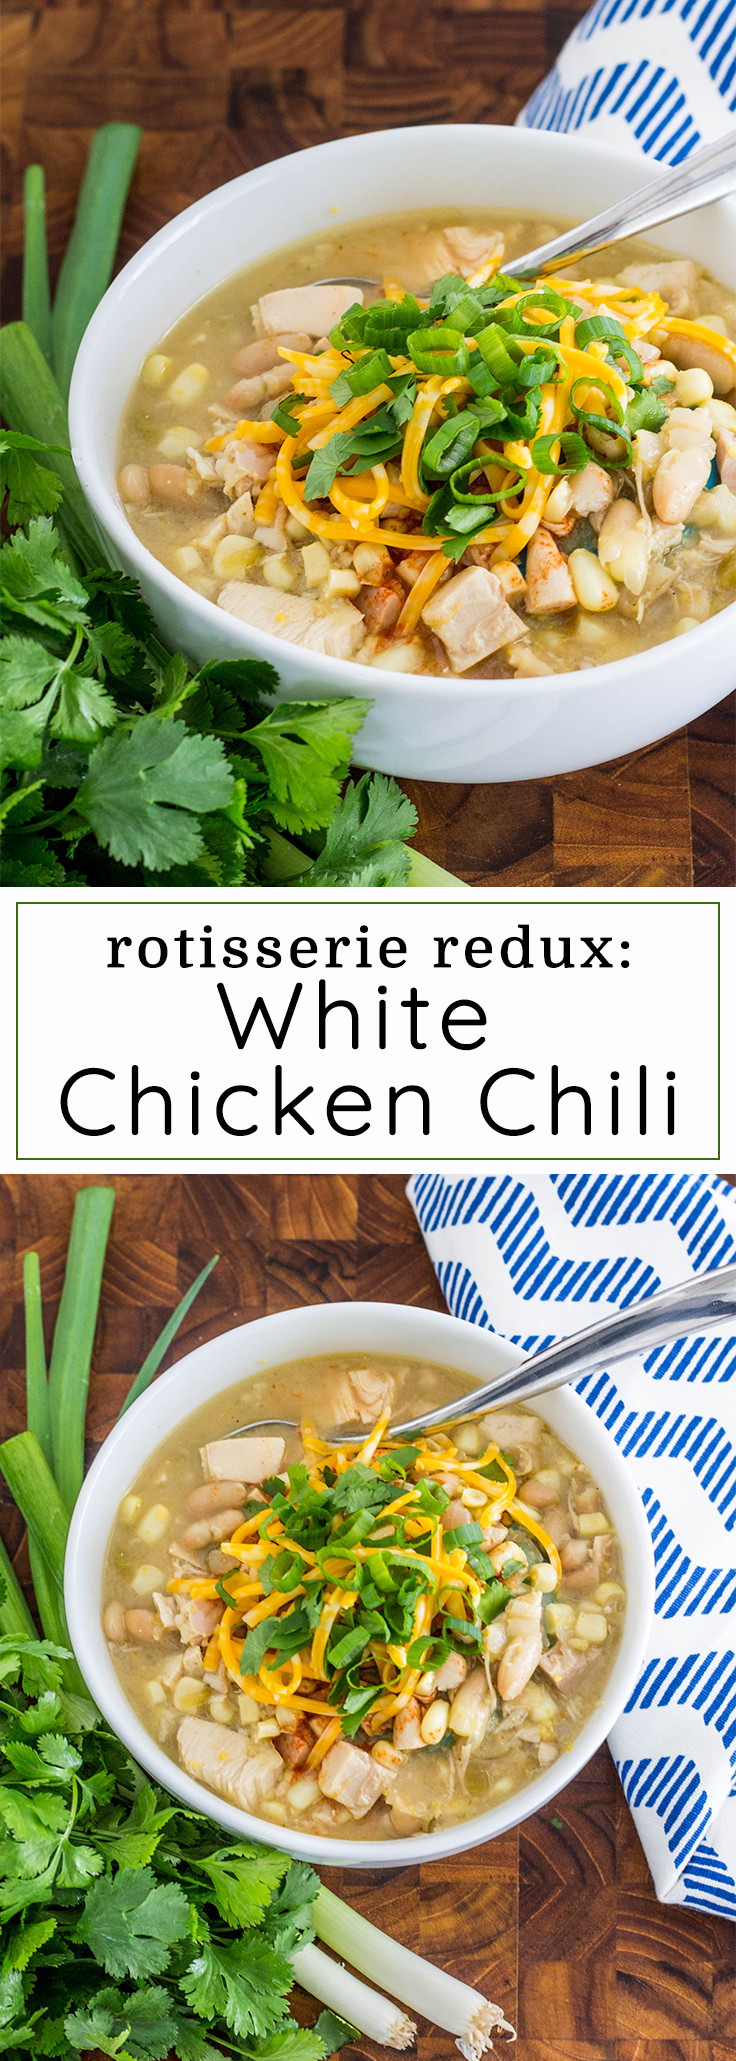 White Chicken Chili Rotisserie
 Rotisserie Redux White Chicken Chili Ketchup and Kale